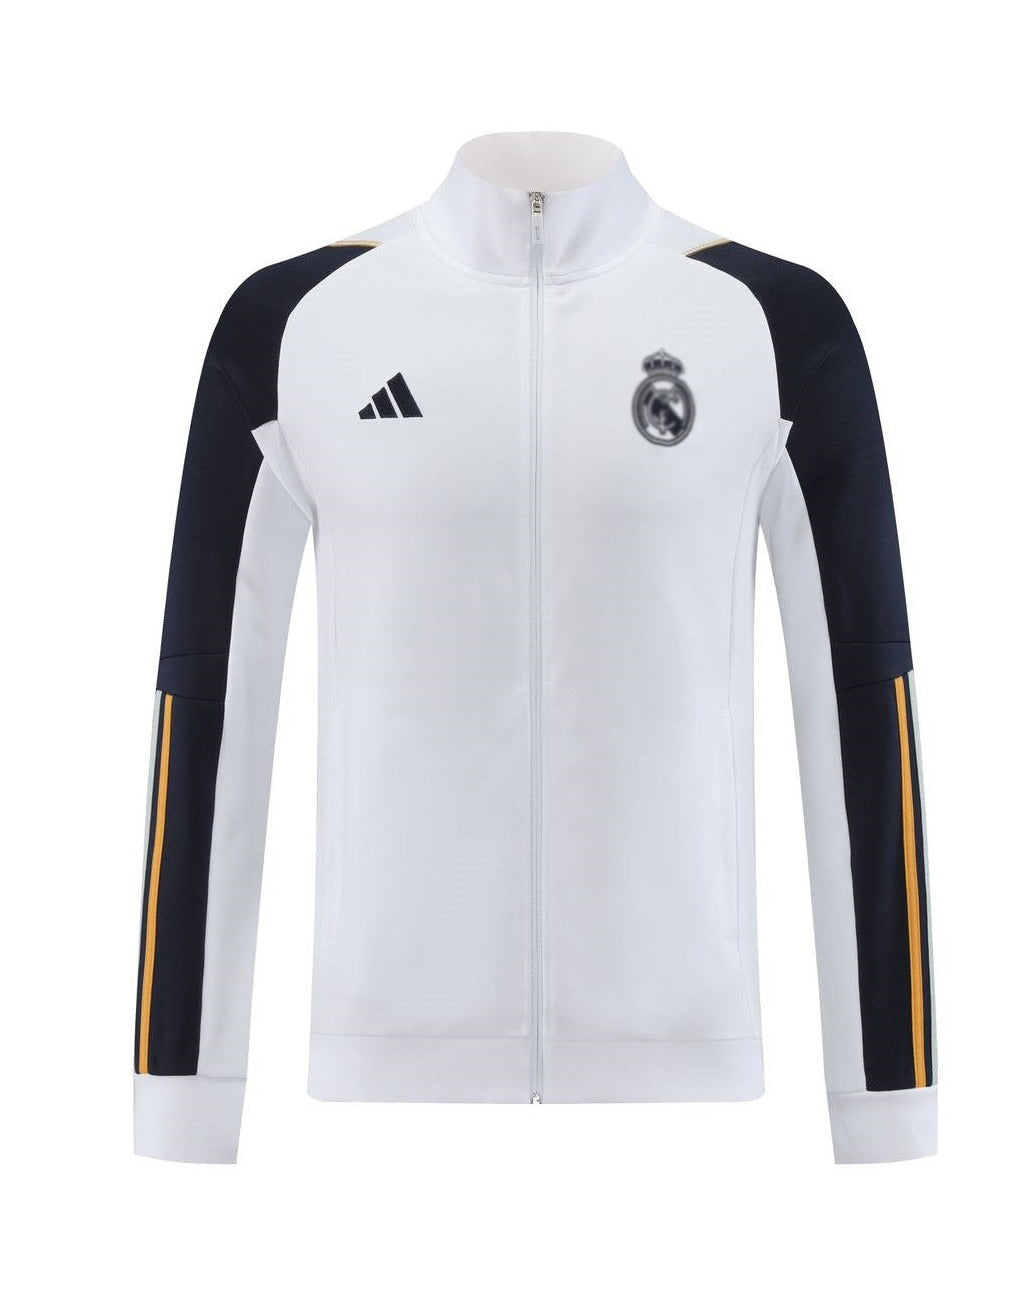 RL Madrid White Jacket 23 24 Season